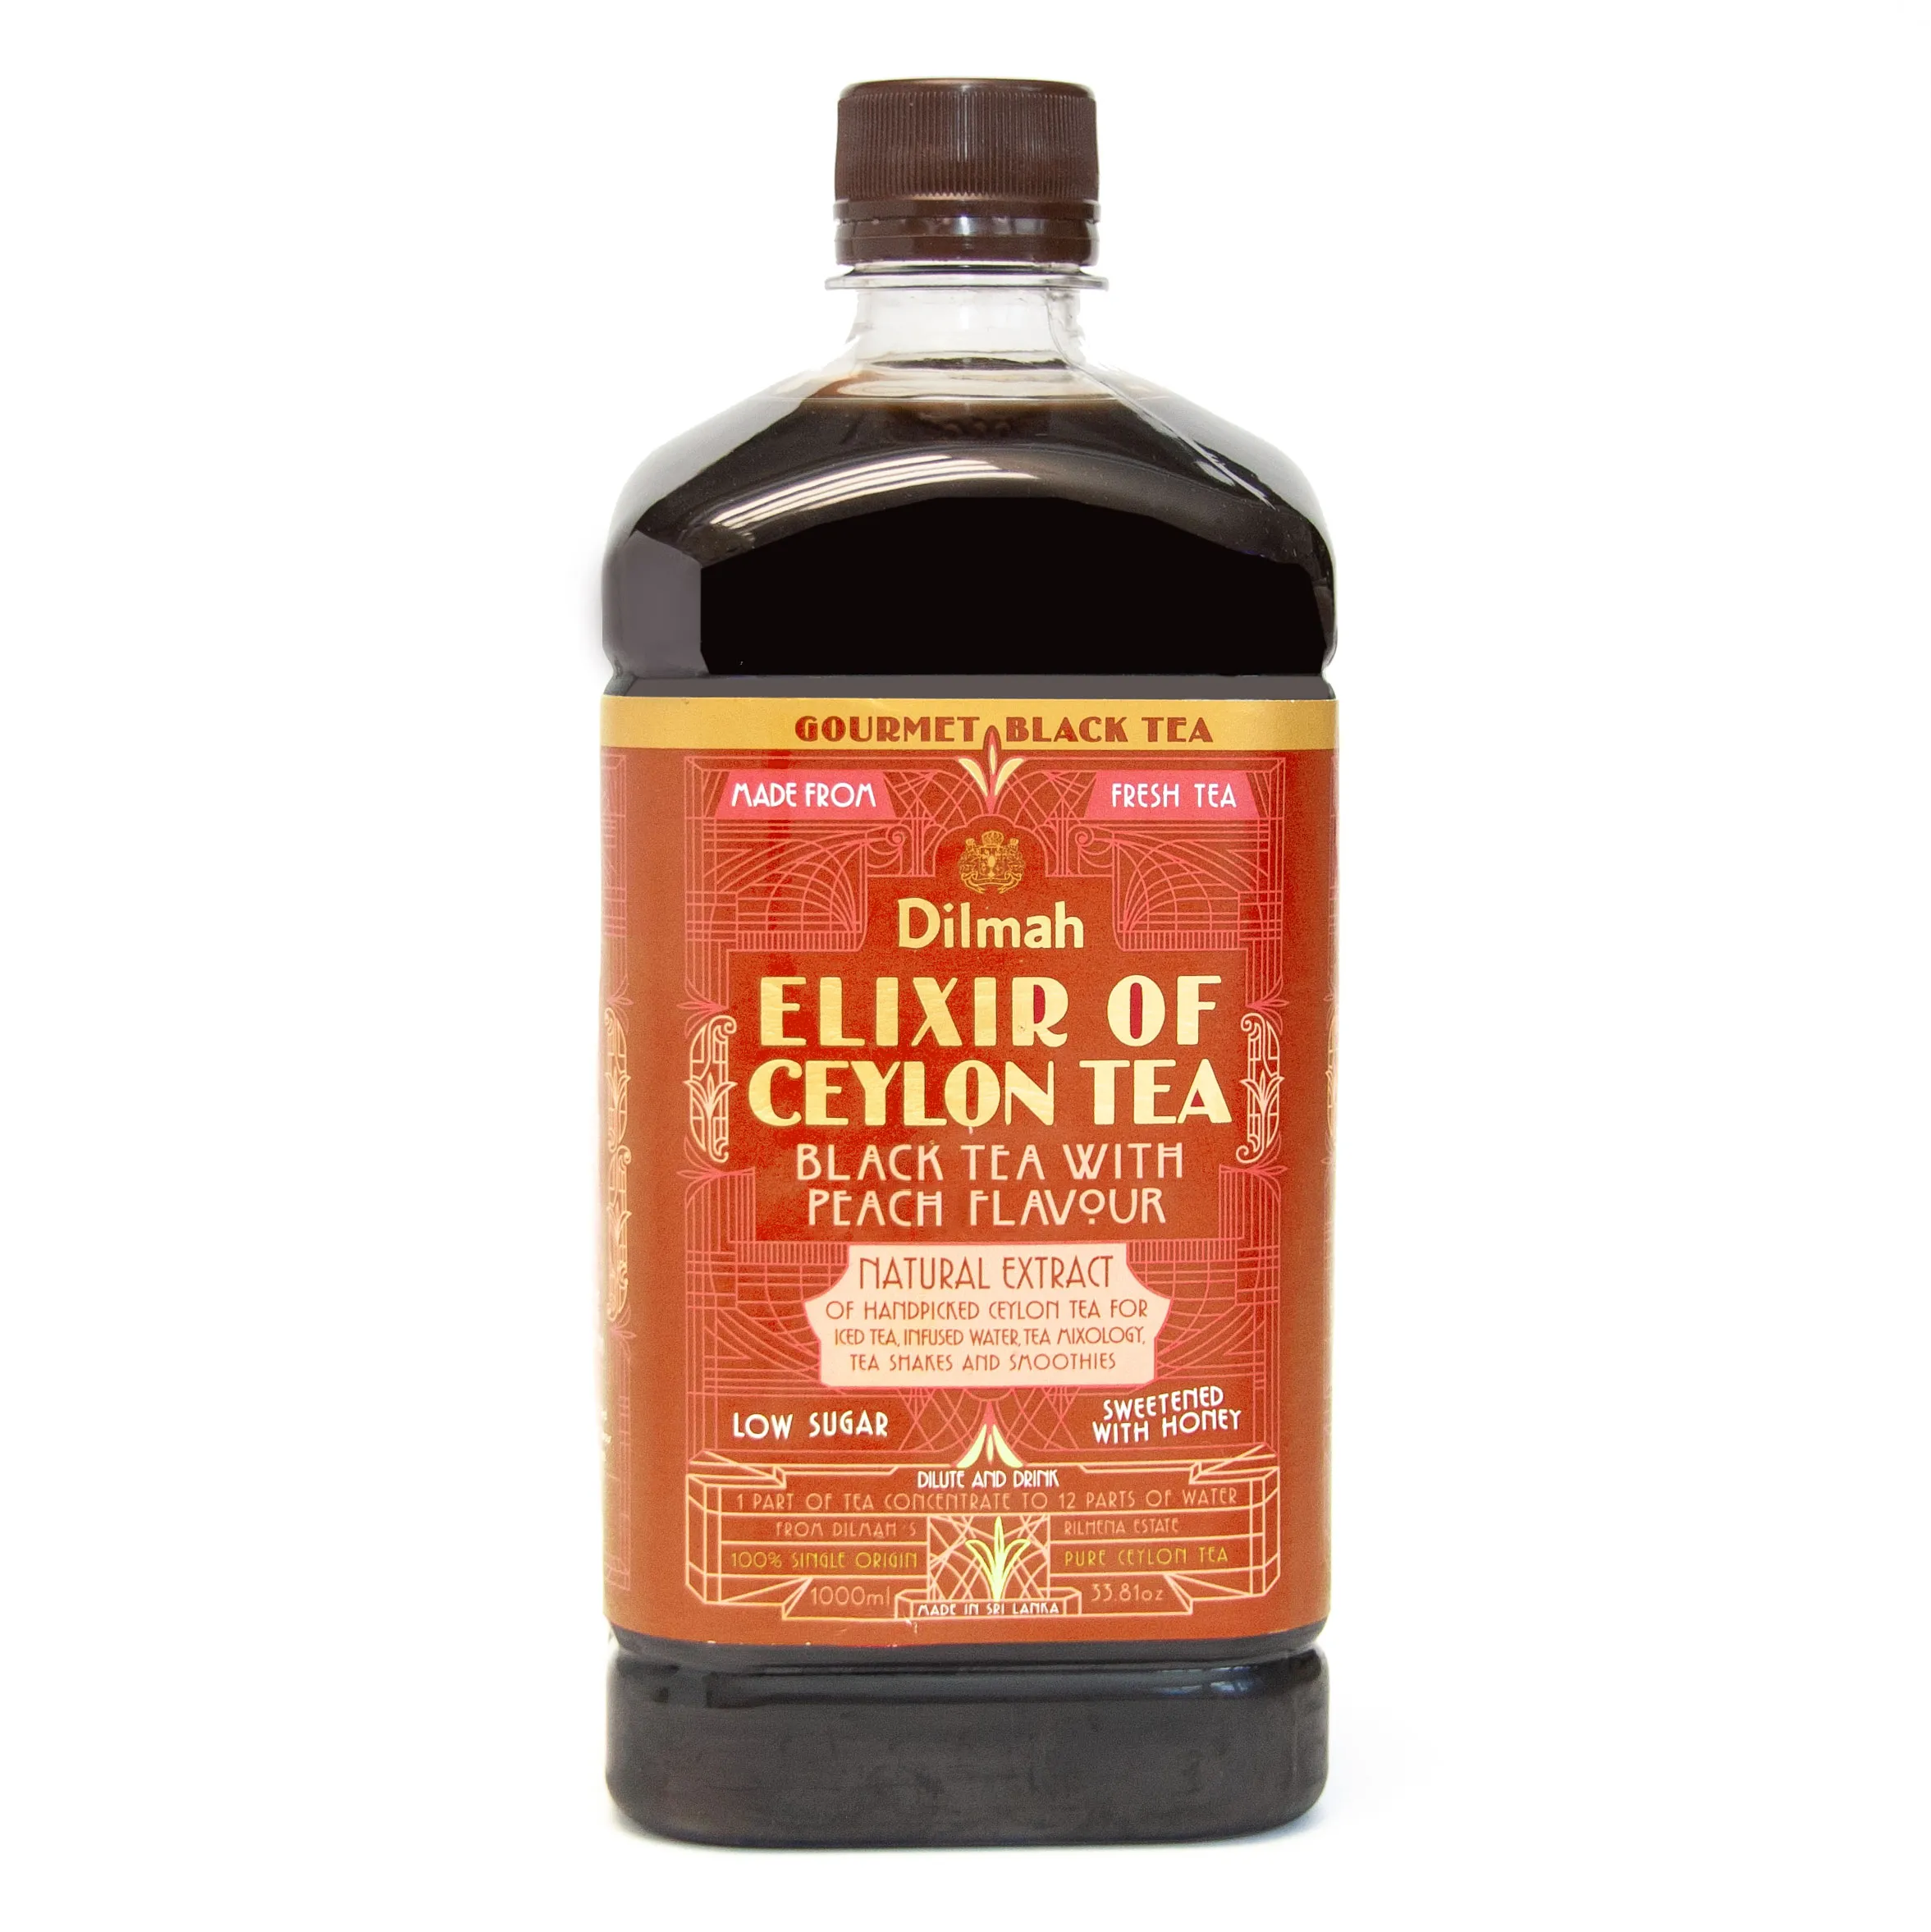 Bottle of Elixir of Ceylon tea with Peach flavour